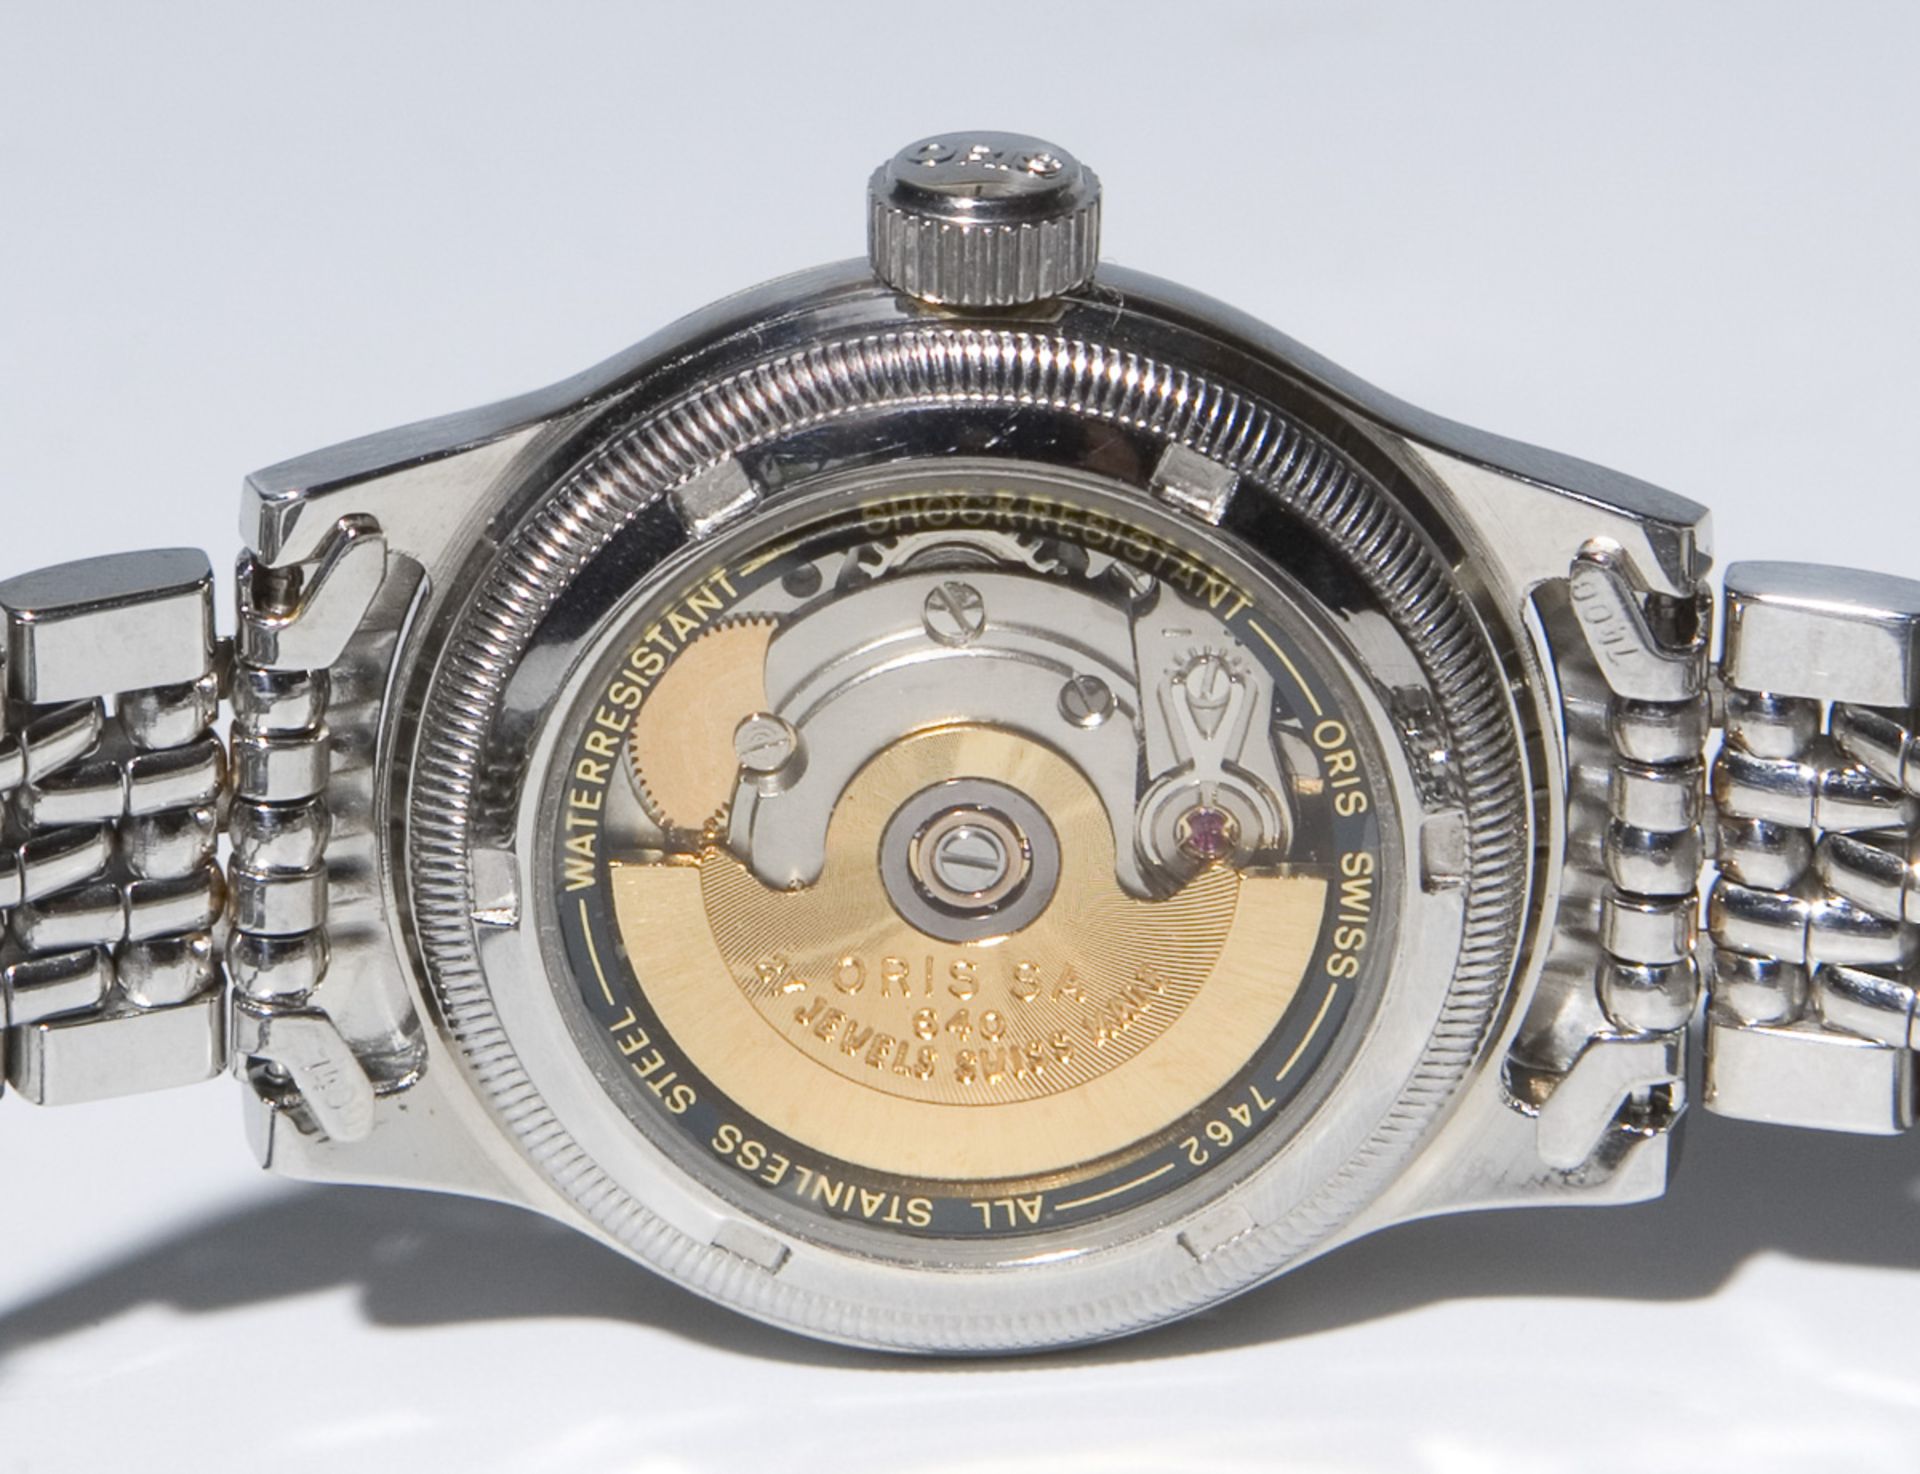 Oris-Automatik-Armbanduhr.Edelstahl, partiell goldfarben beschichtet, Zifferblatt, Werk,Armband - Bild 2 aus 2